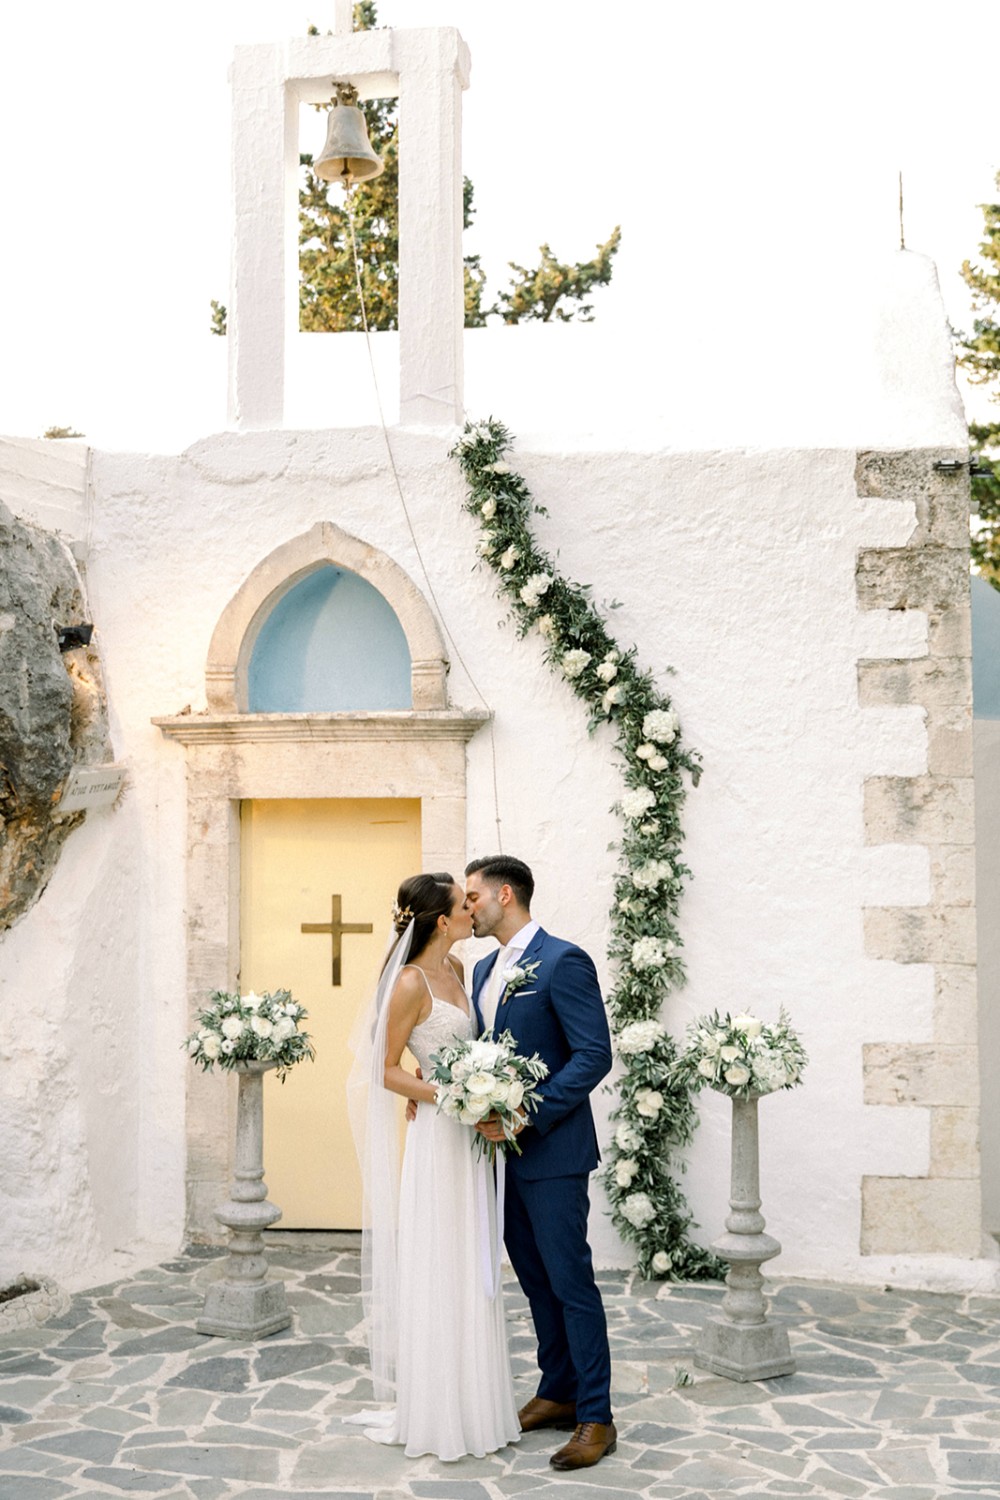 newlyweds at Greek Orthodox wedding ceremony in Crete